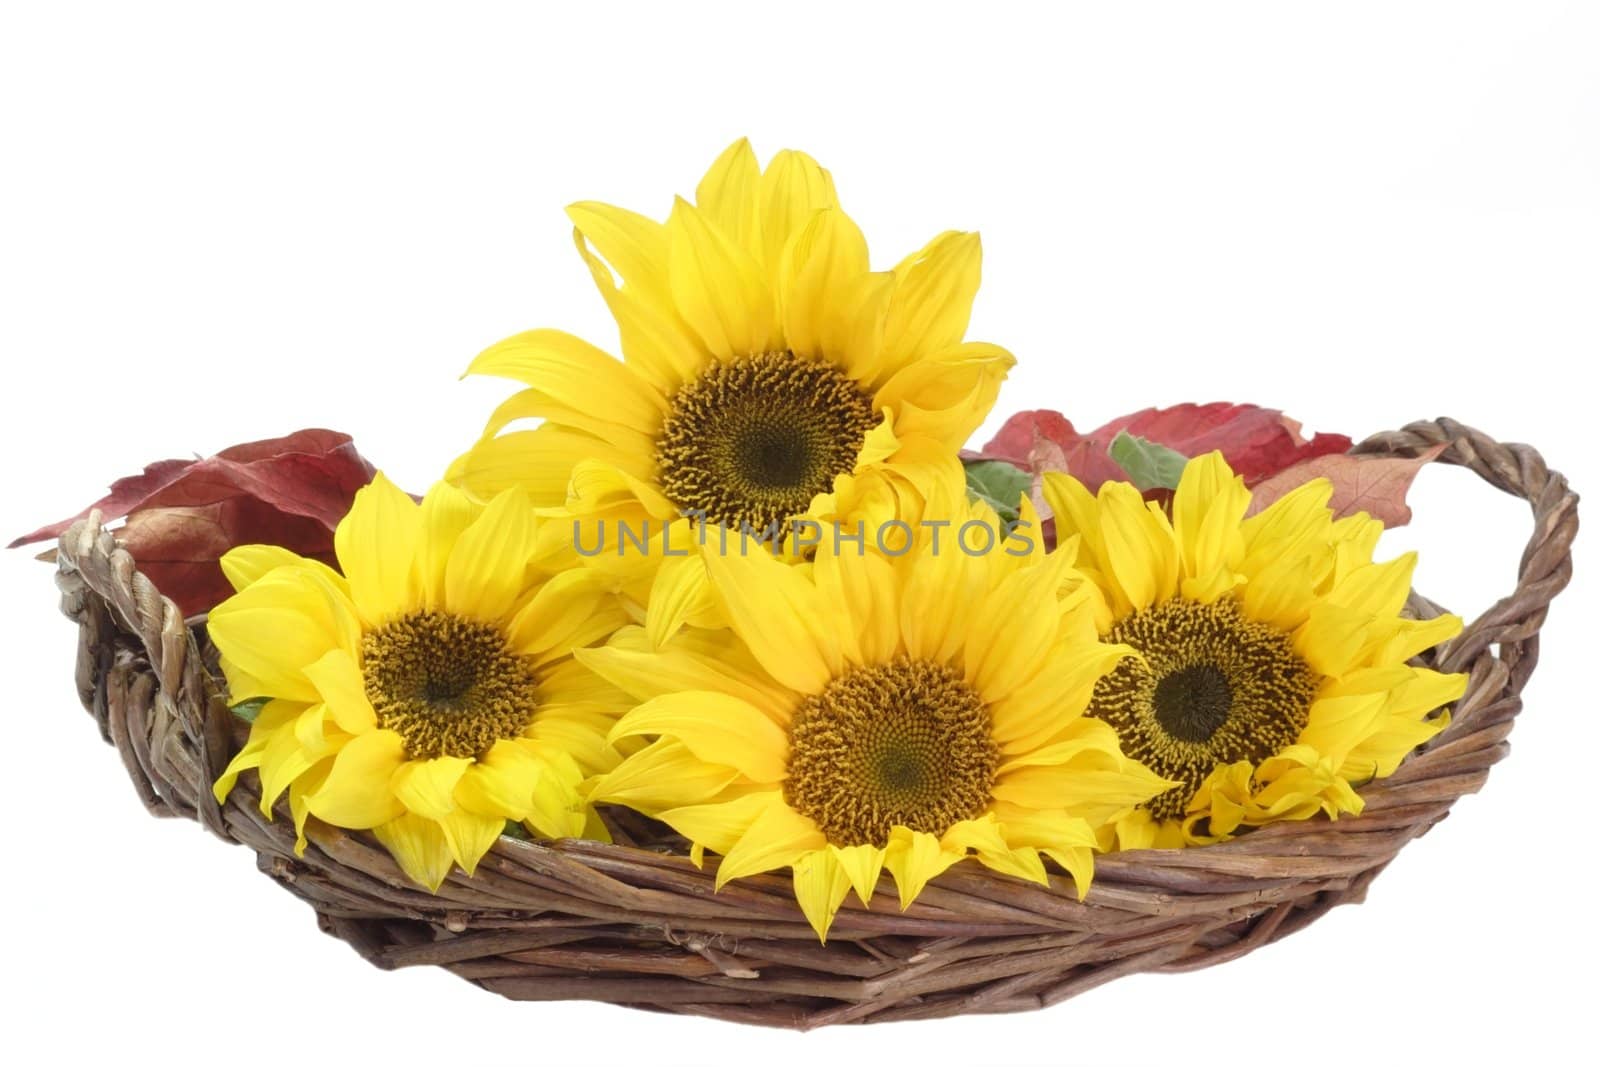 Sunflowers in a Basket by Teamarbeit